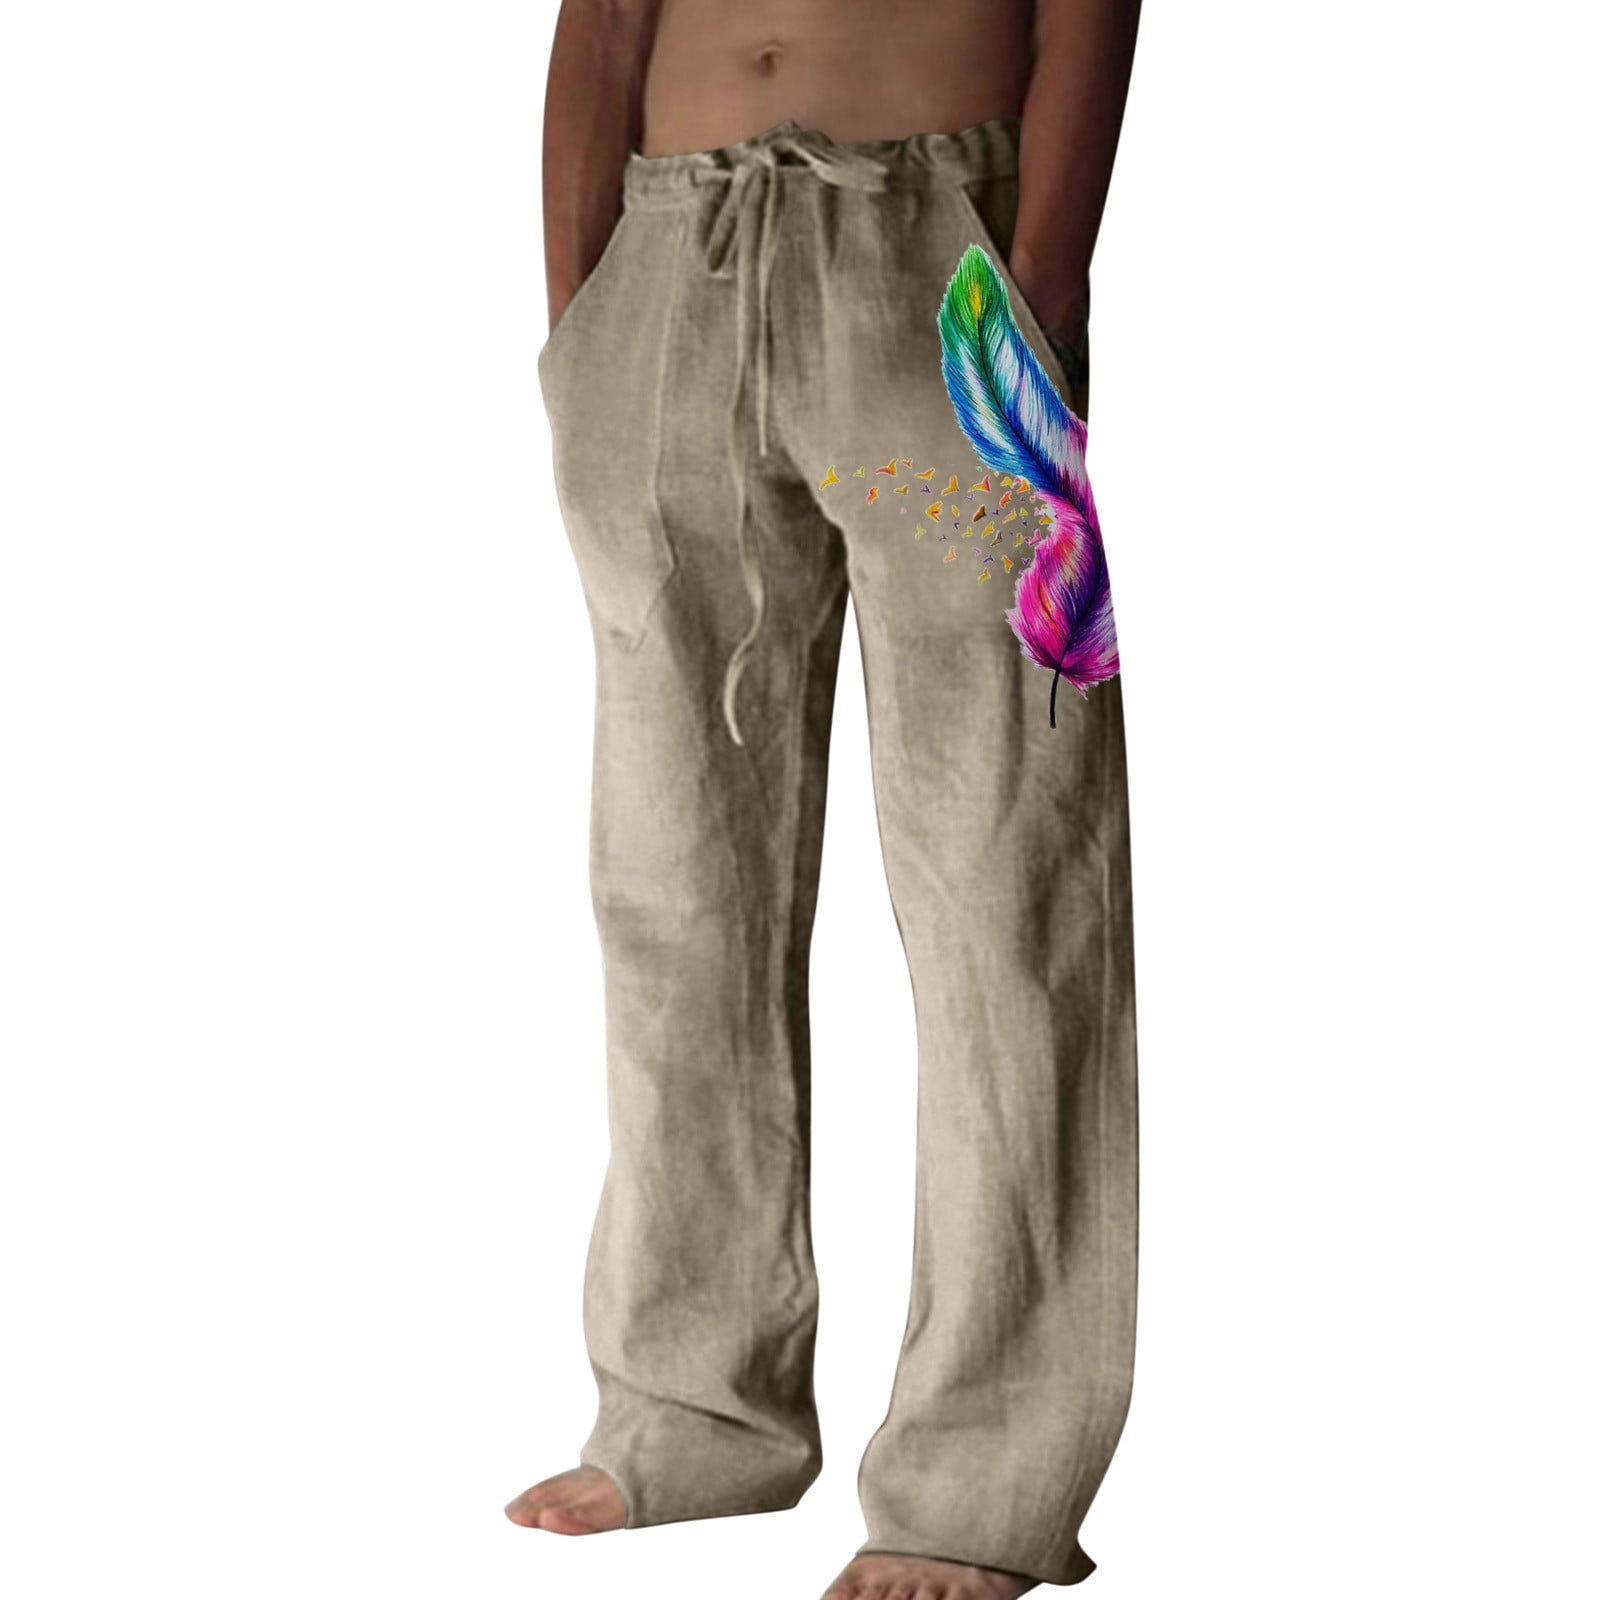 AdBFJAF Pants for Men Sweatpants Mens Fashion Casual Cotton and Linen ...